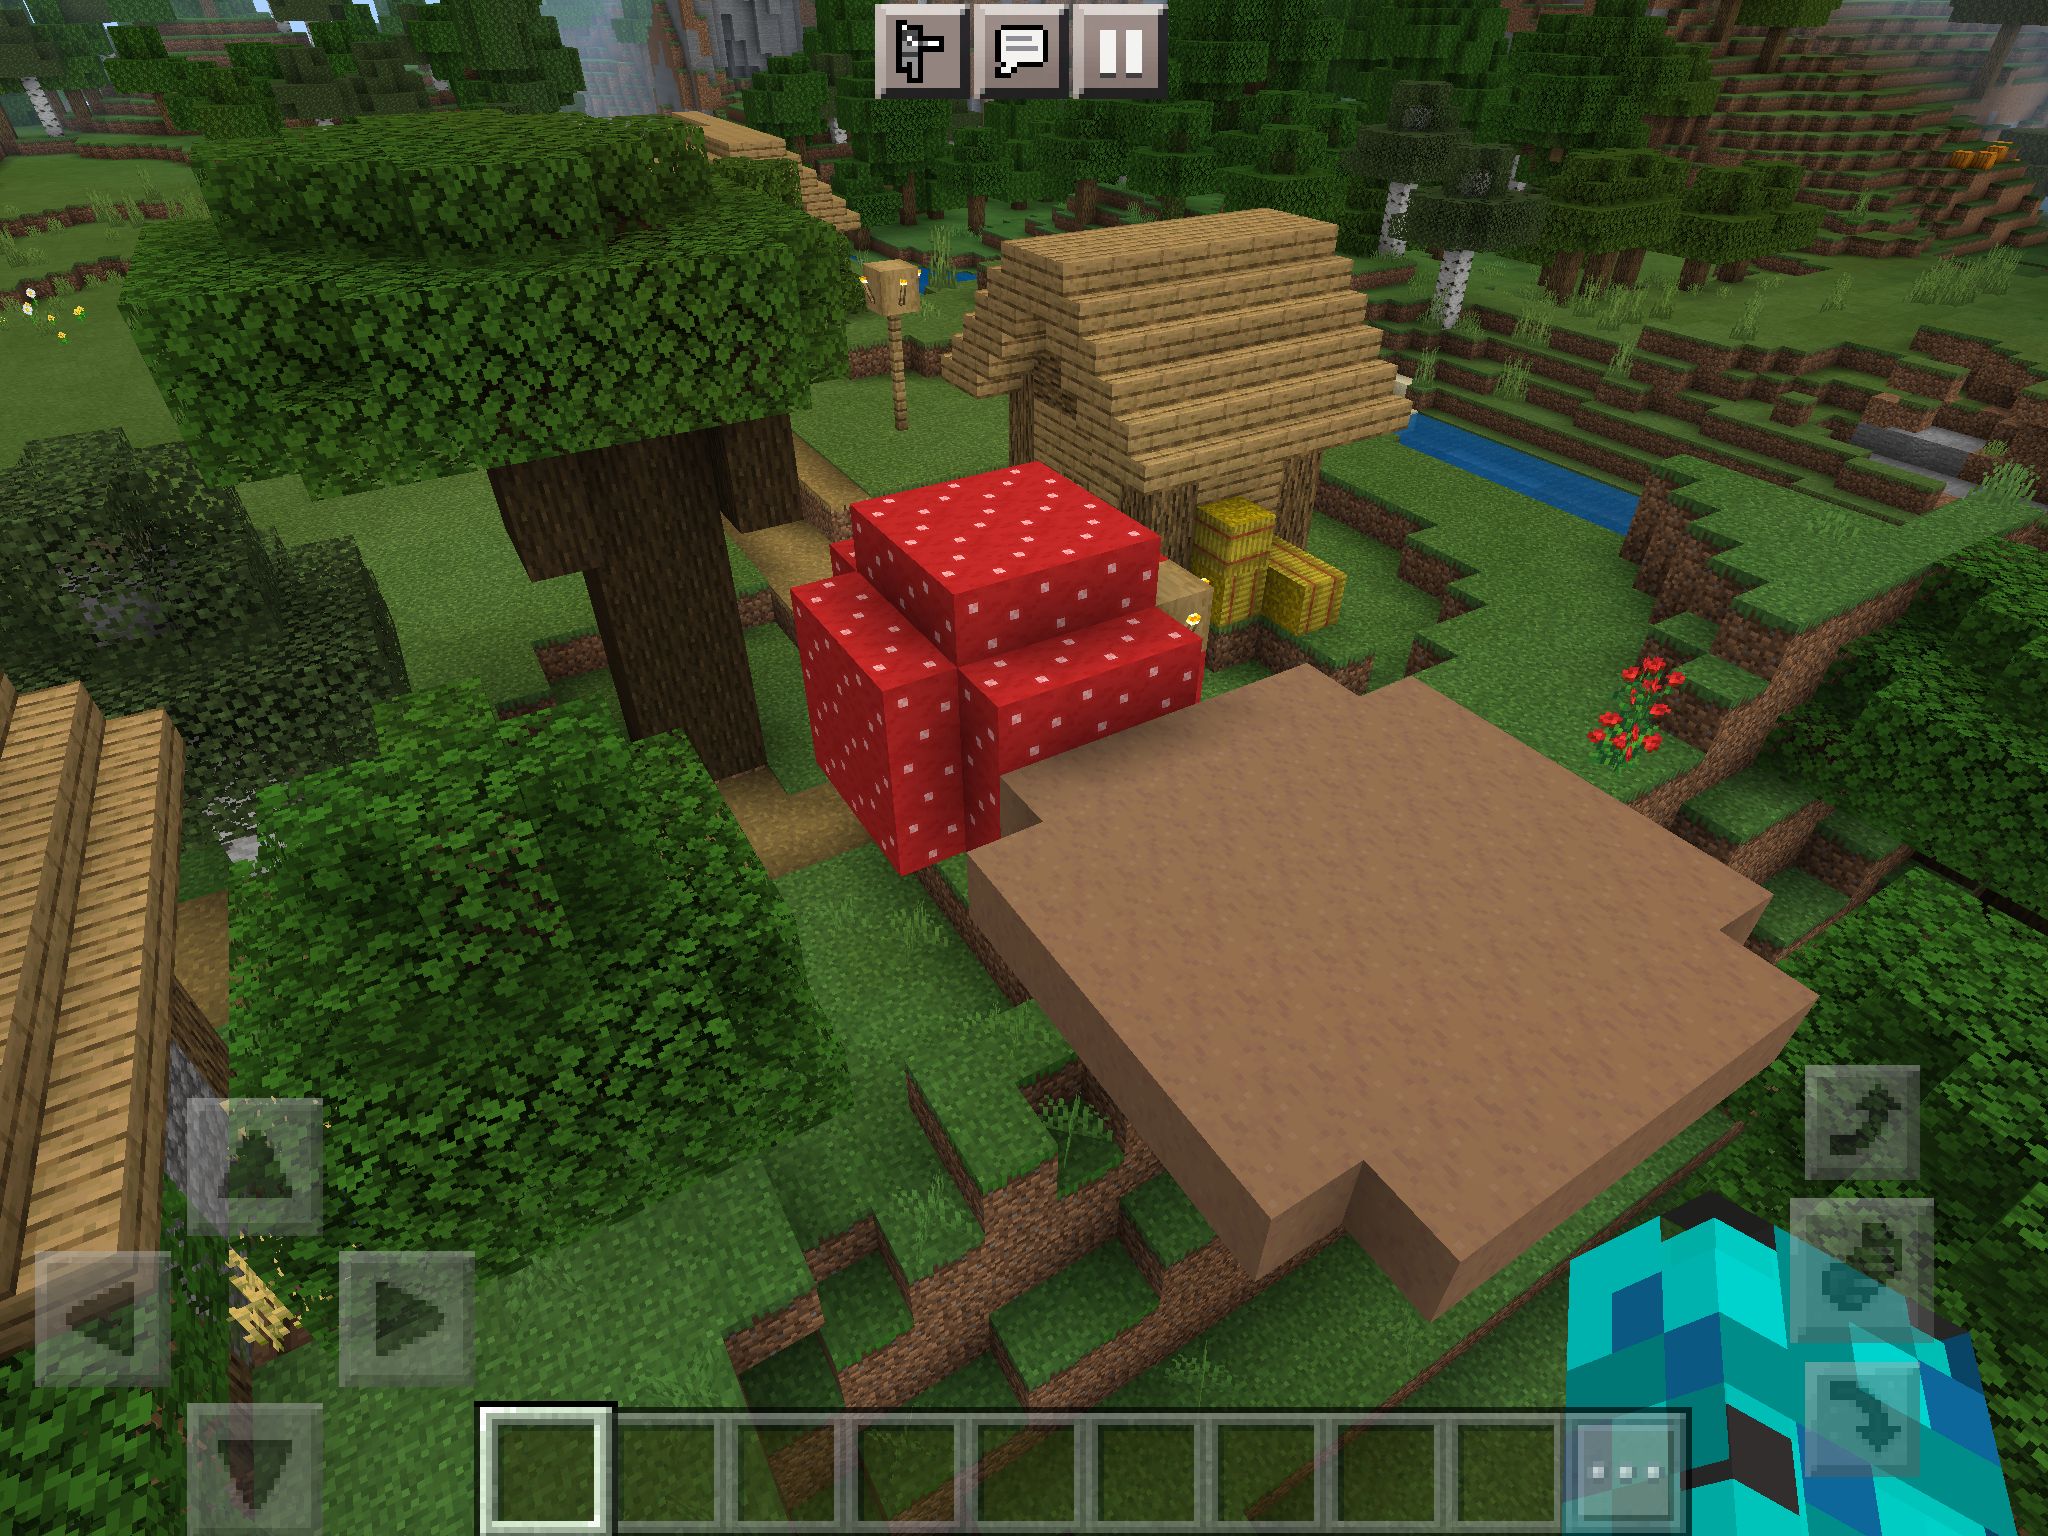 Dark village with a and biome blend Minecraft Seeds